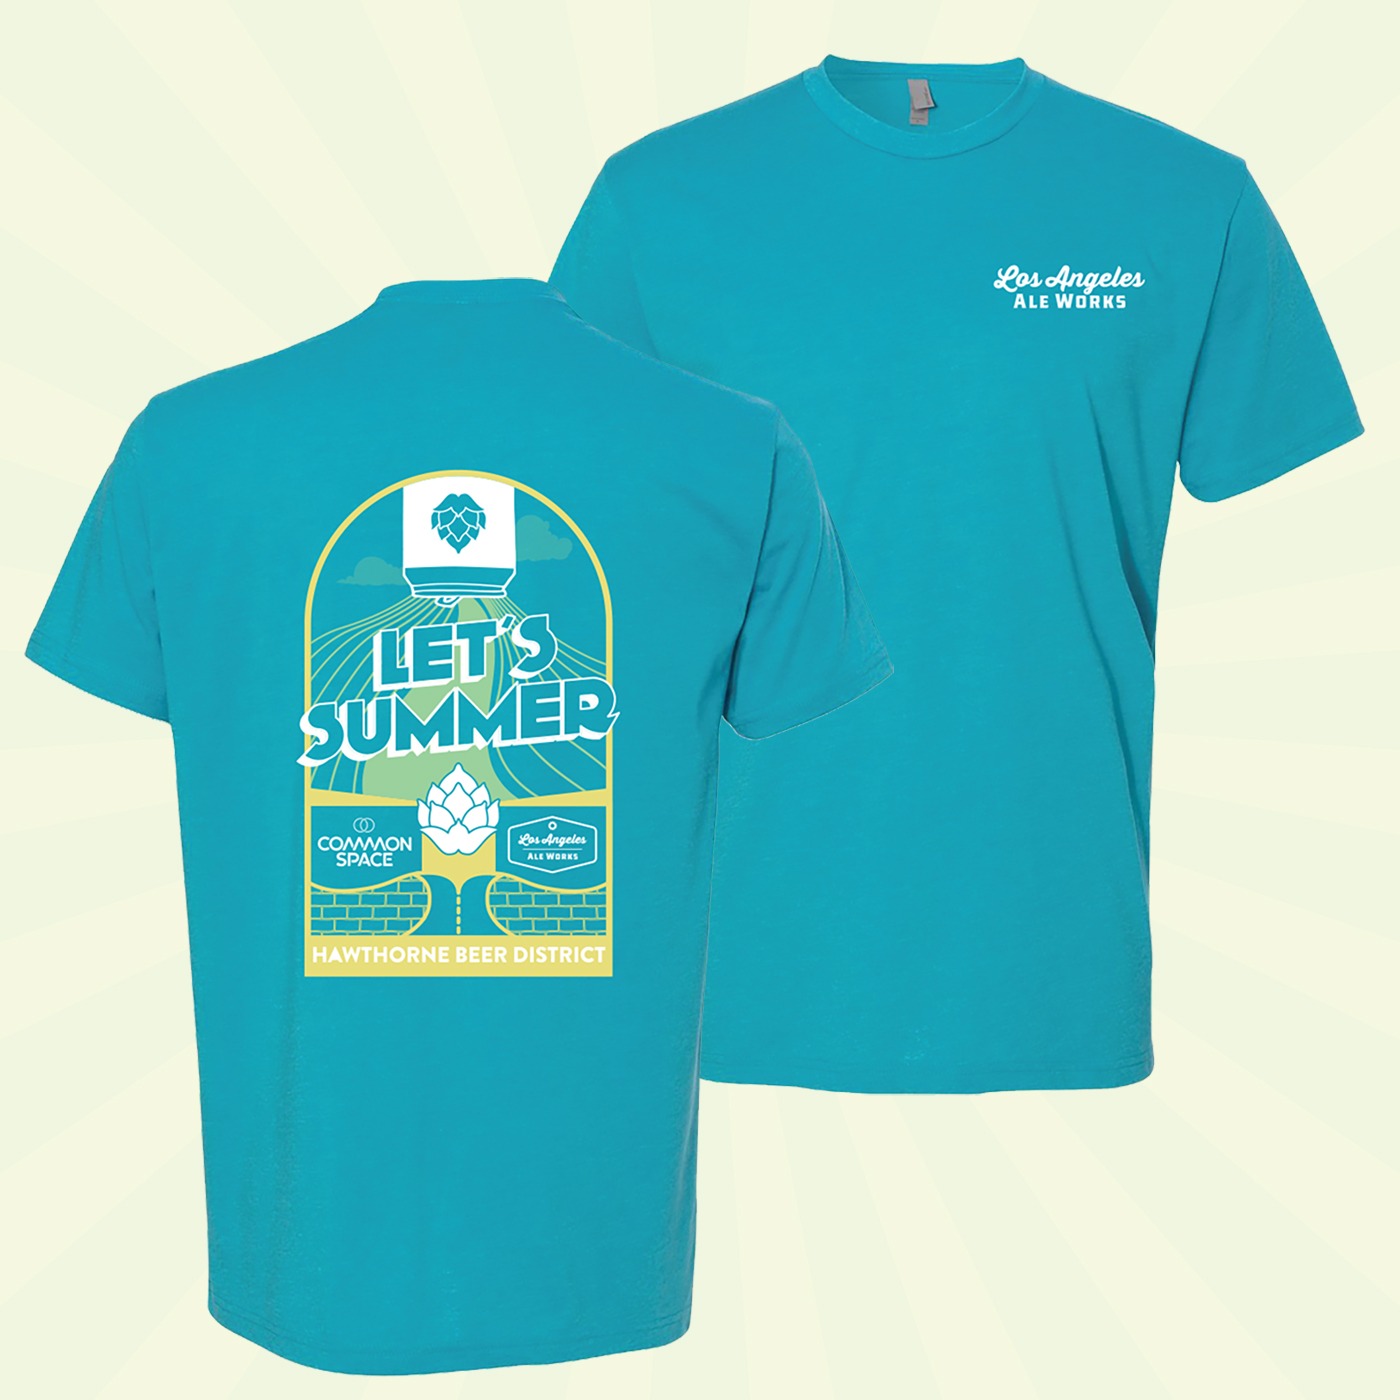 "Let's Summer" shirt in blue w/ LA Ale Works logo on front